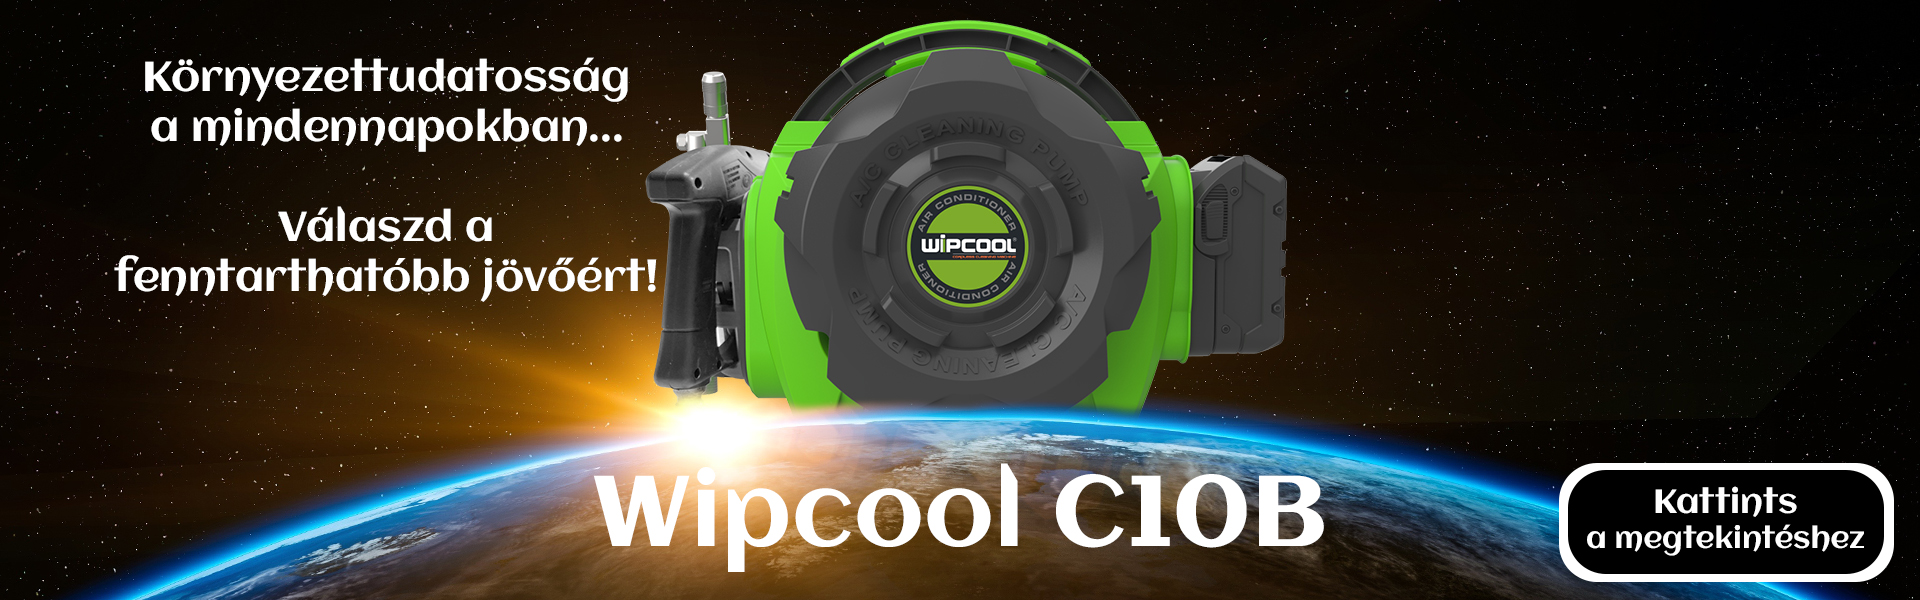 Wipcool c10b